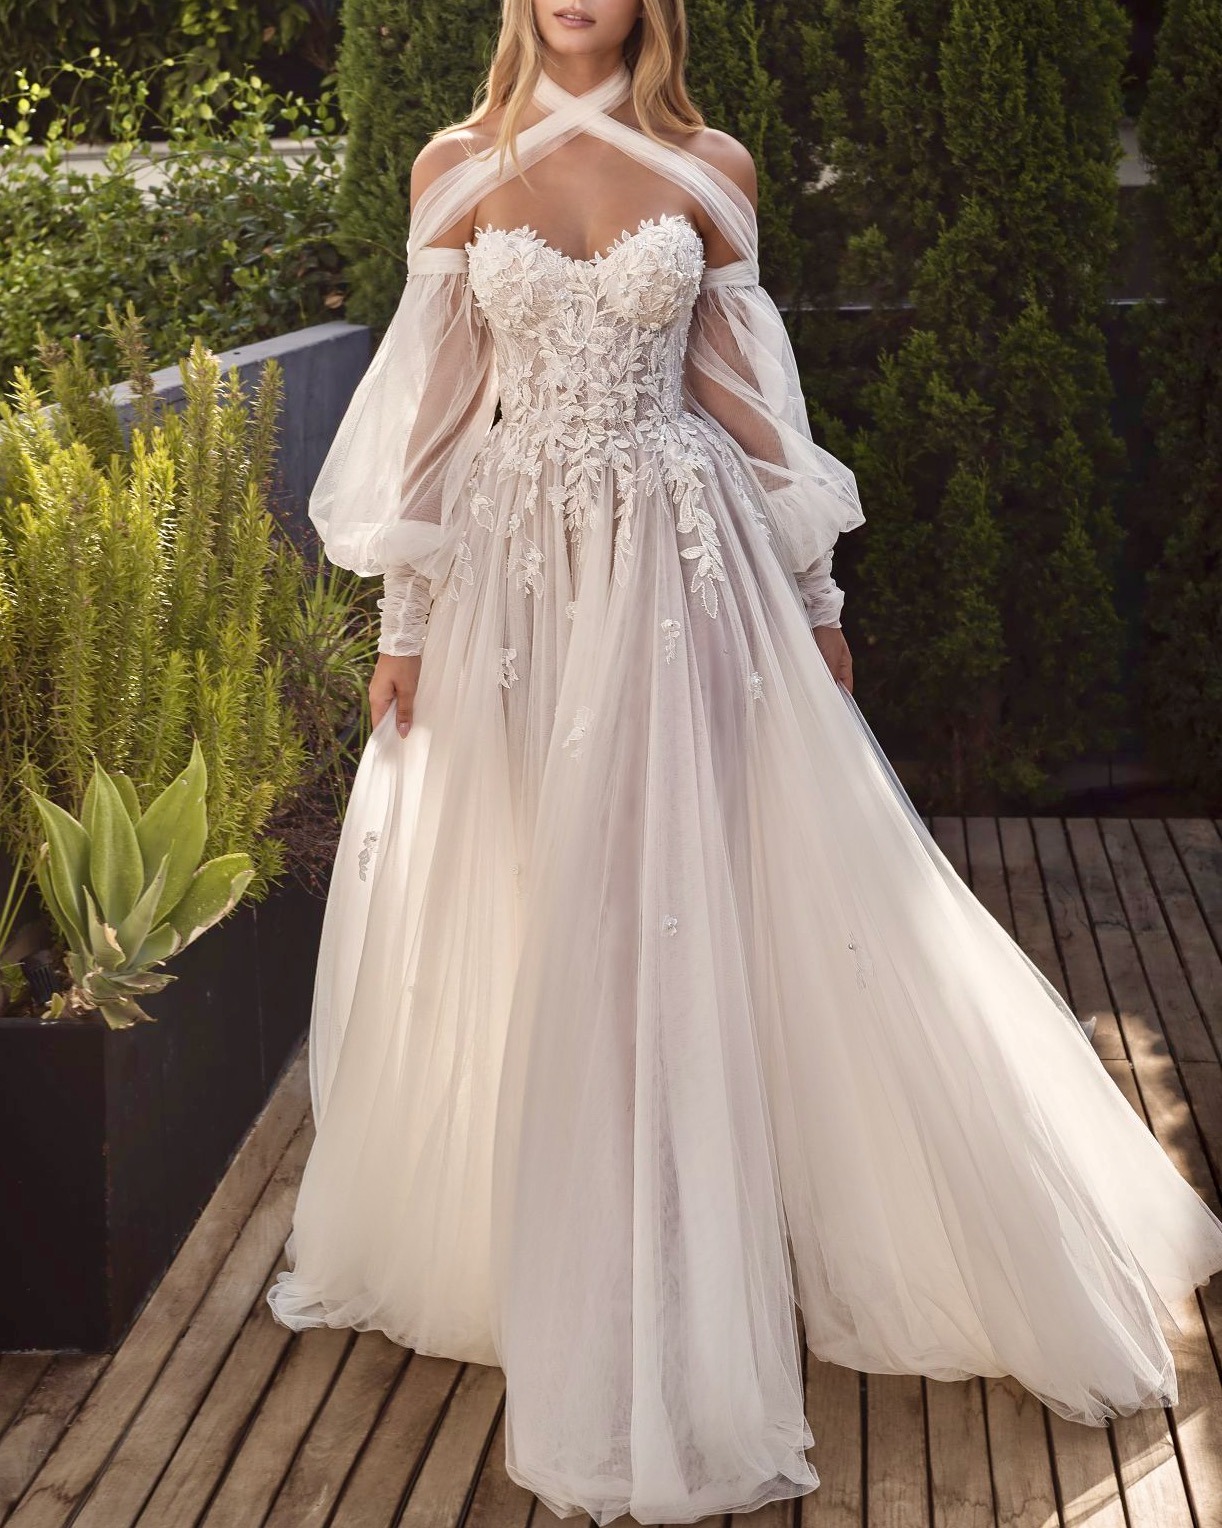 Wedding Gown Gorgeous November 23, 2020 | ZsaZsa Bellagio - Like No Other